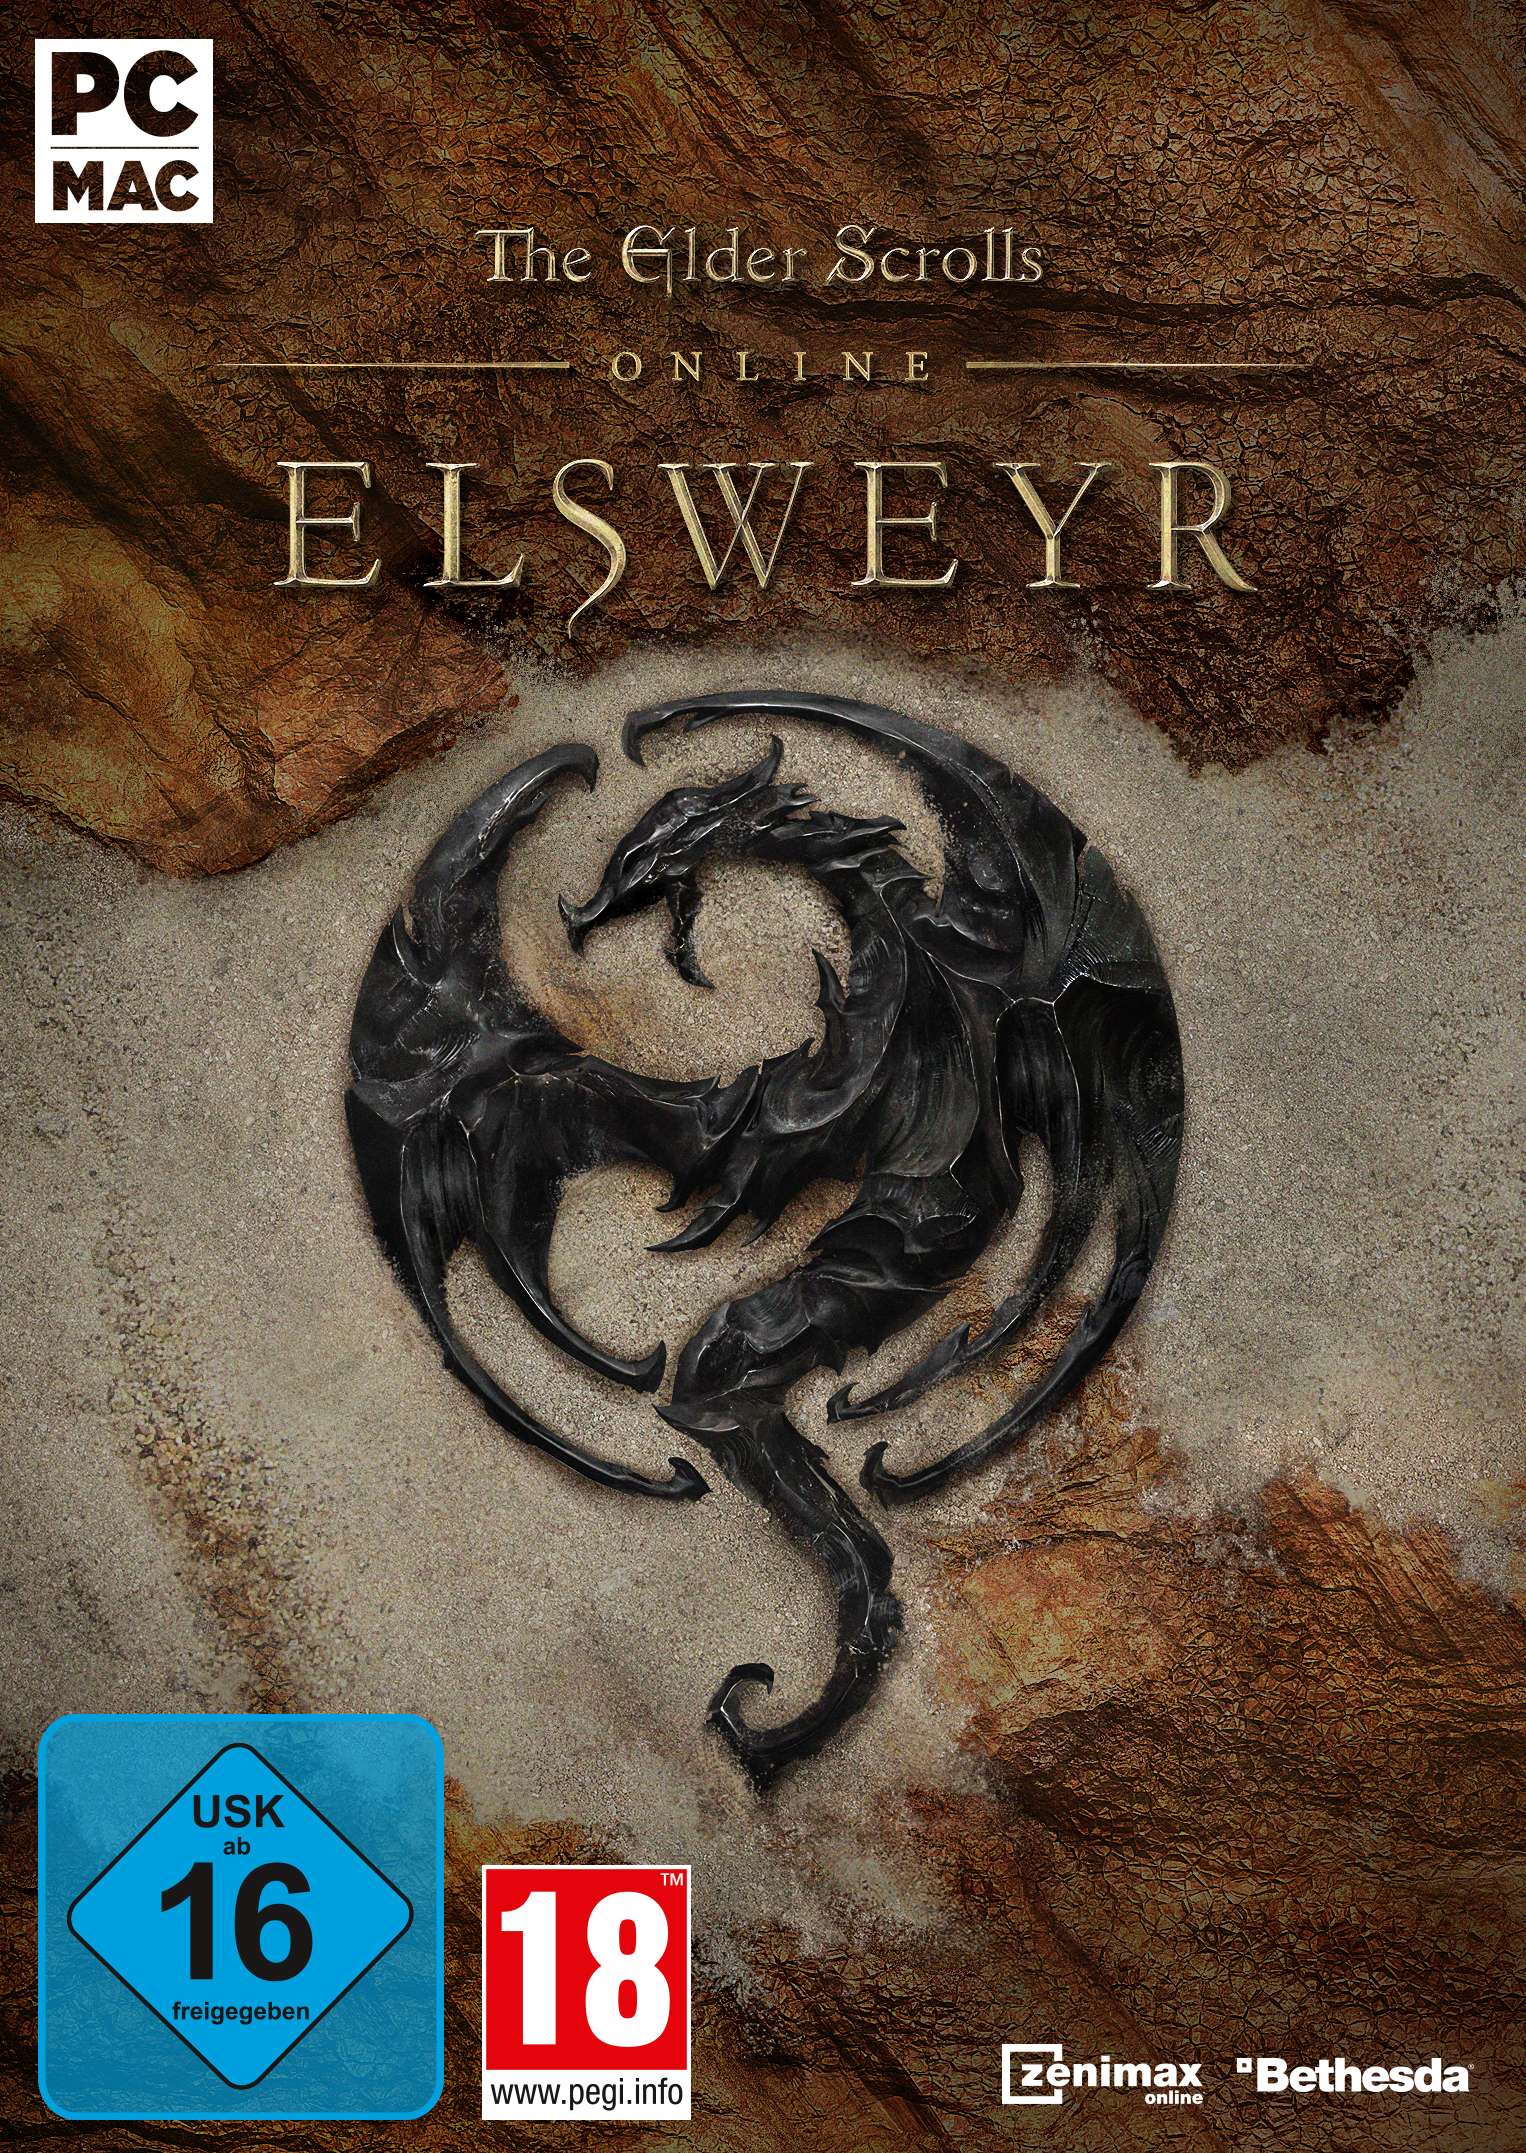 Online: Scrolls - [PC] The Elder Elsweyr